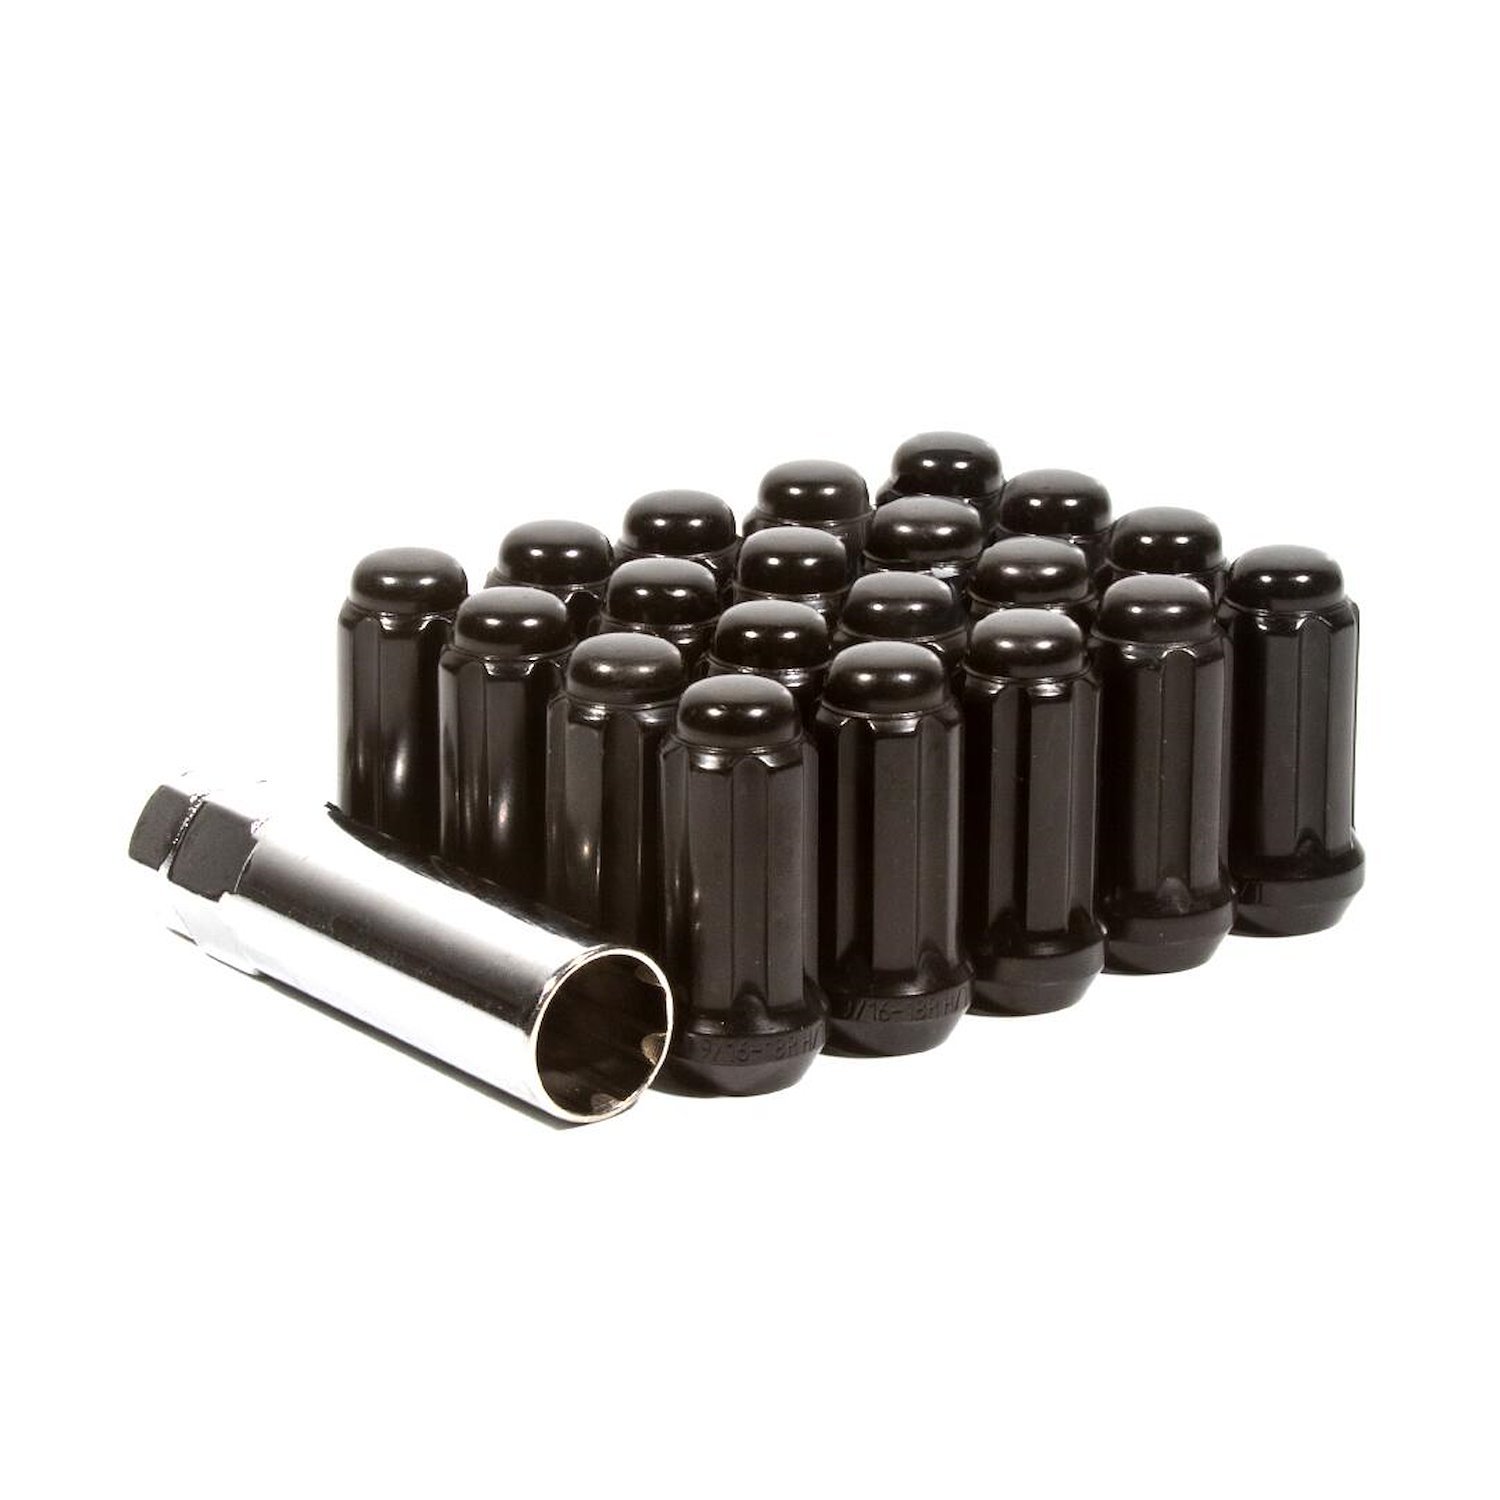 LK-W5614STB Lug Kit, Spline, M14X1.5, 6 Lug Kit, Black, 24 Nuts